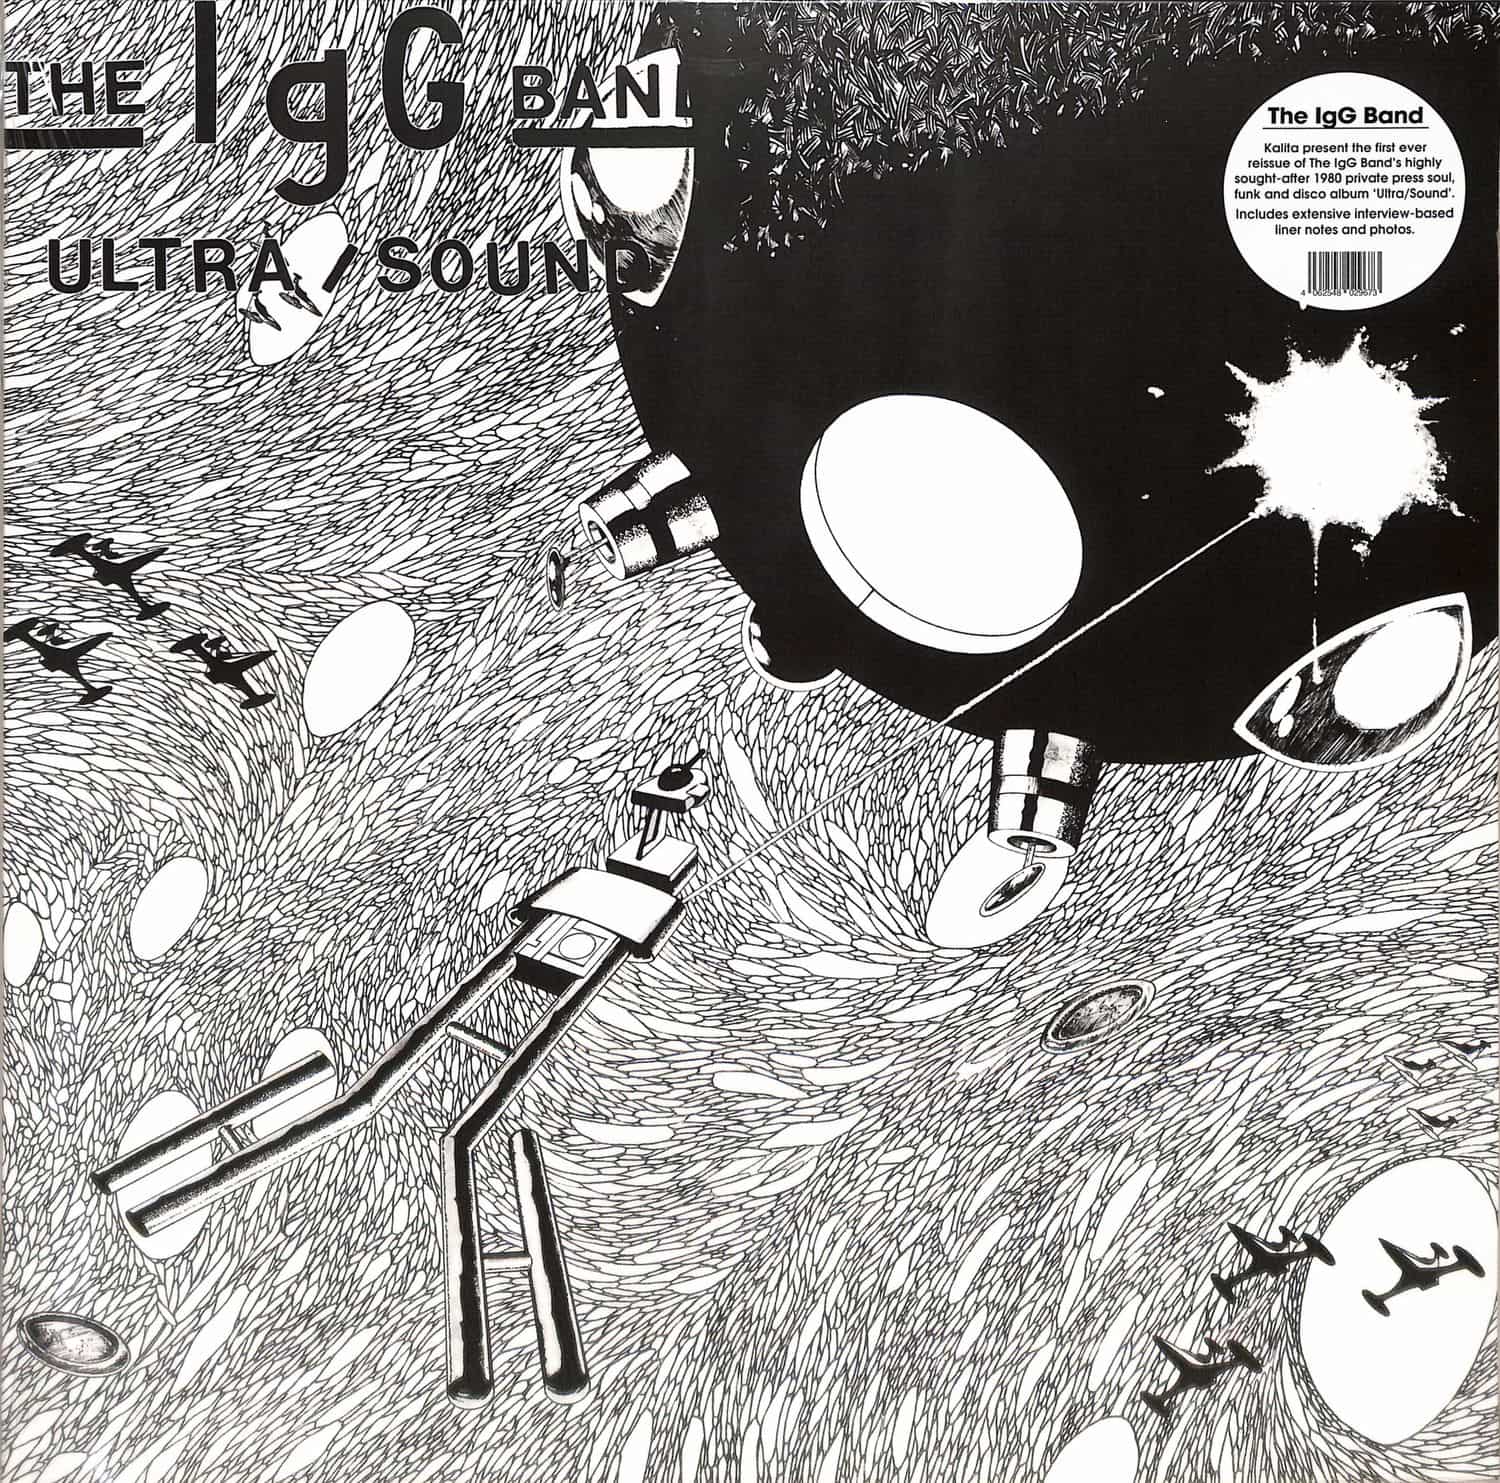 The IgG Band - ULTRA/SOUND 